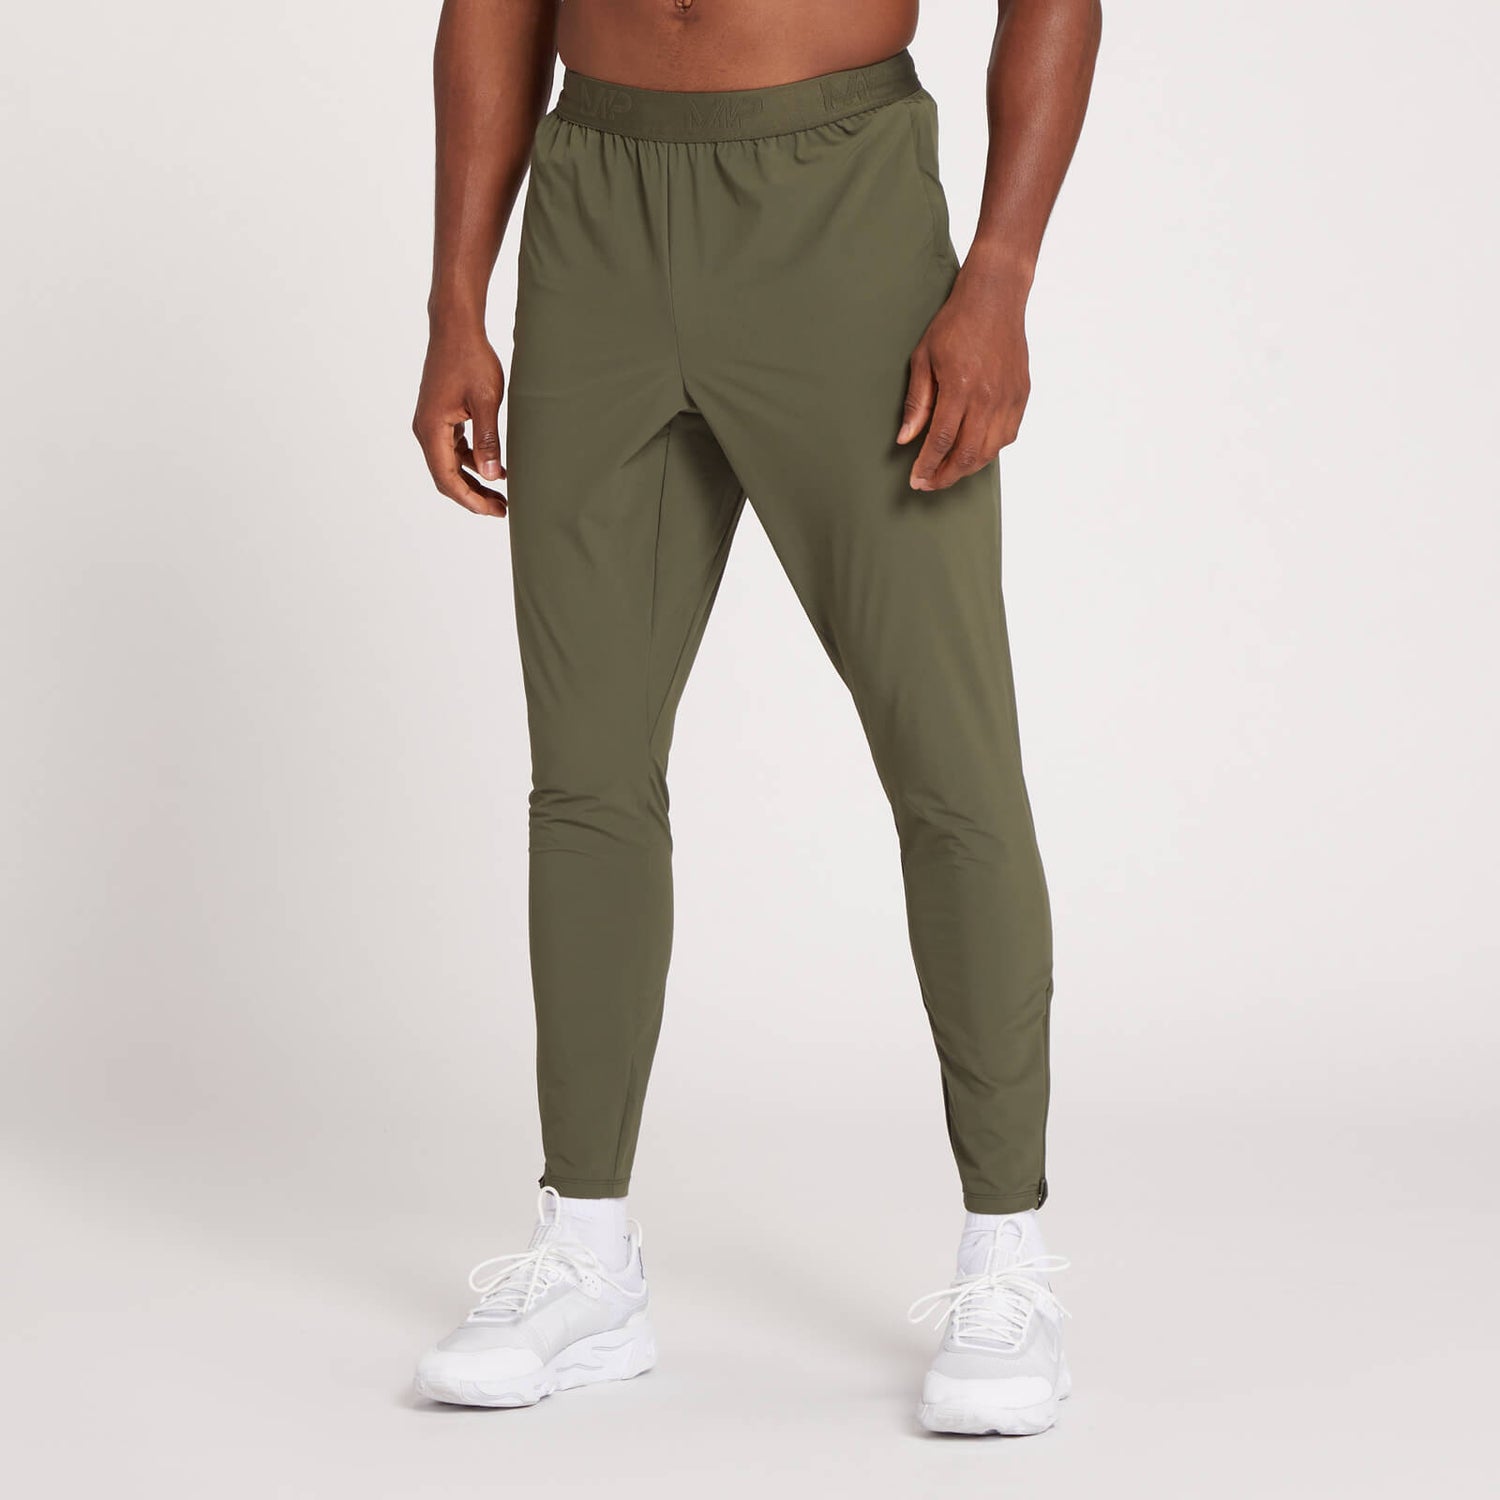 Pantaloni da jogging sportivi slim fit MP Dynamic da uomo - Verde oliva scuro - L